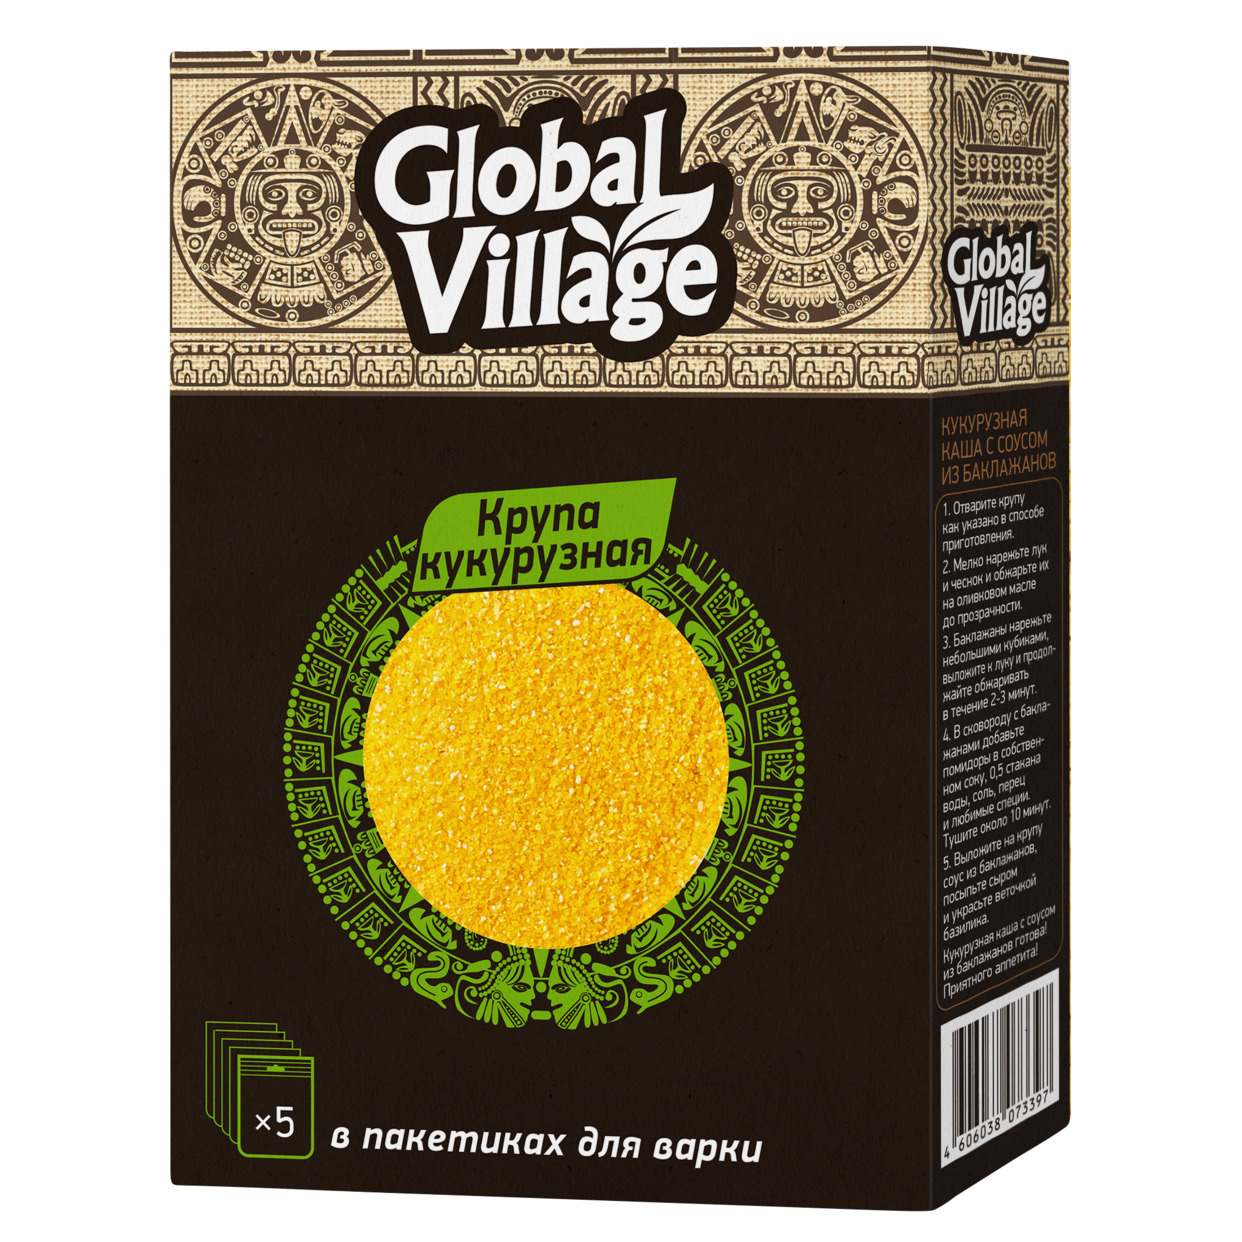 Крупа кукурузная в пакетиках для варки Global Village 5*80 гр